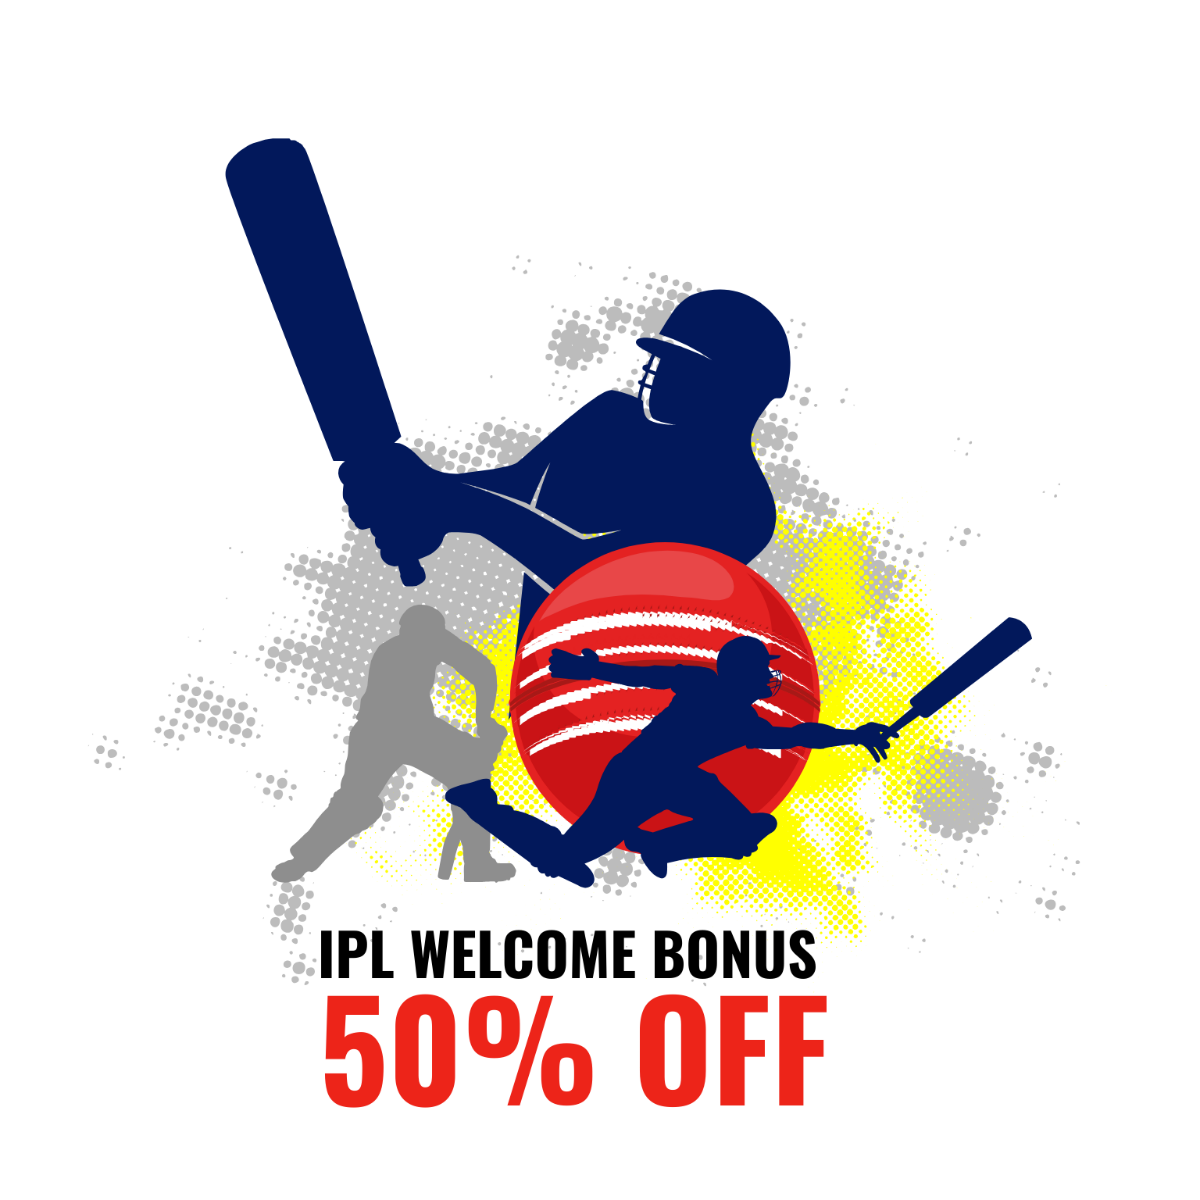 IPL Welcome Bonus Offer Design Template